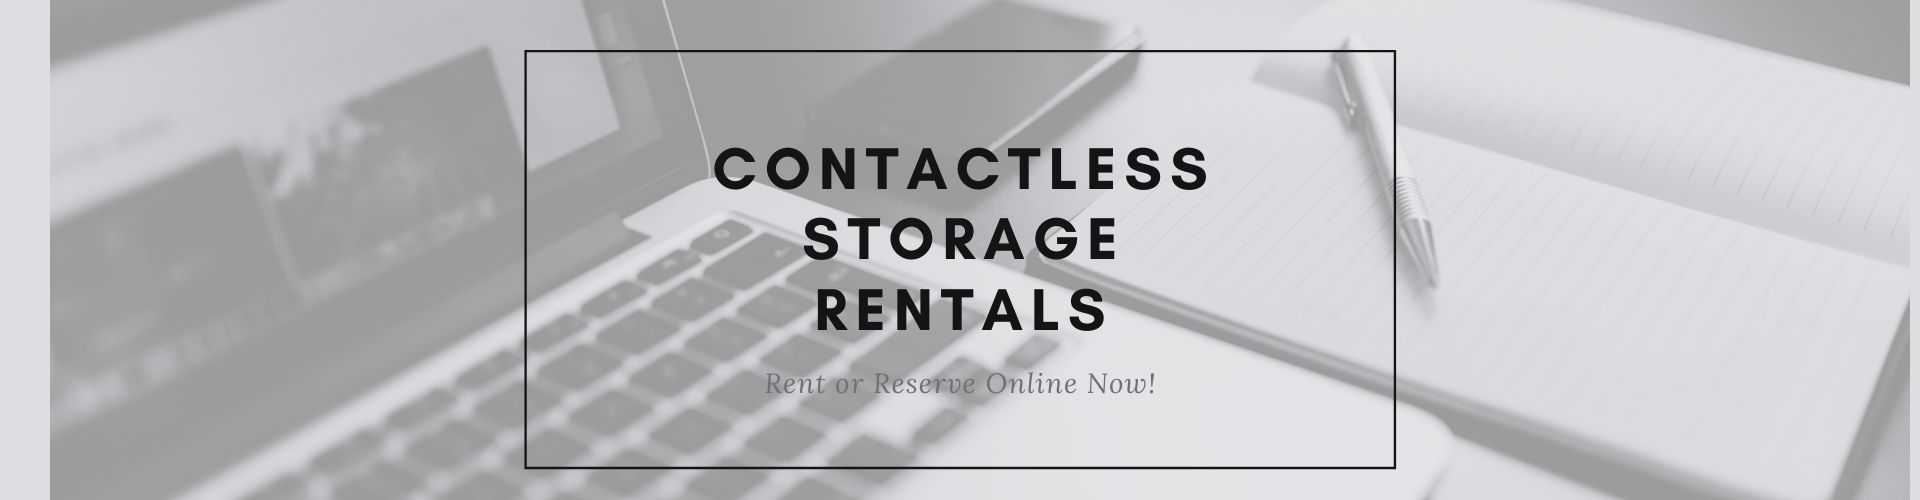 Contactless Storage Rentals in Miami FL